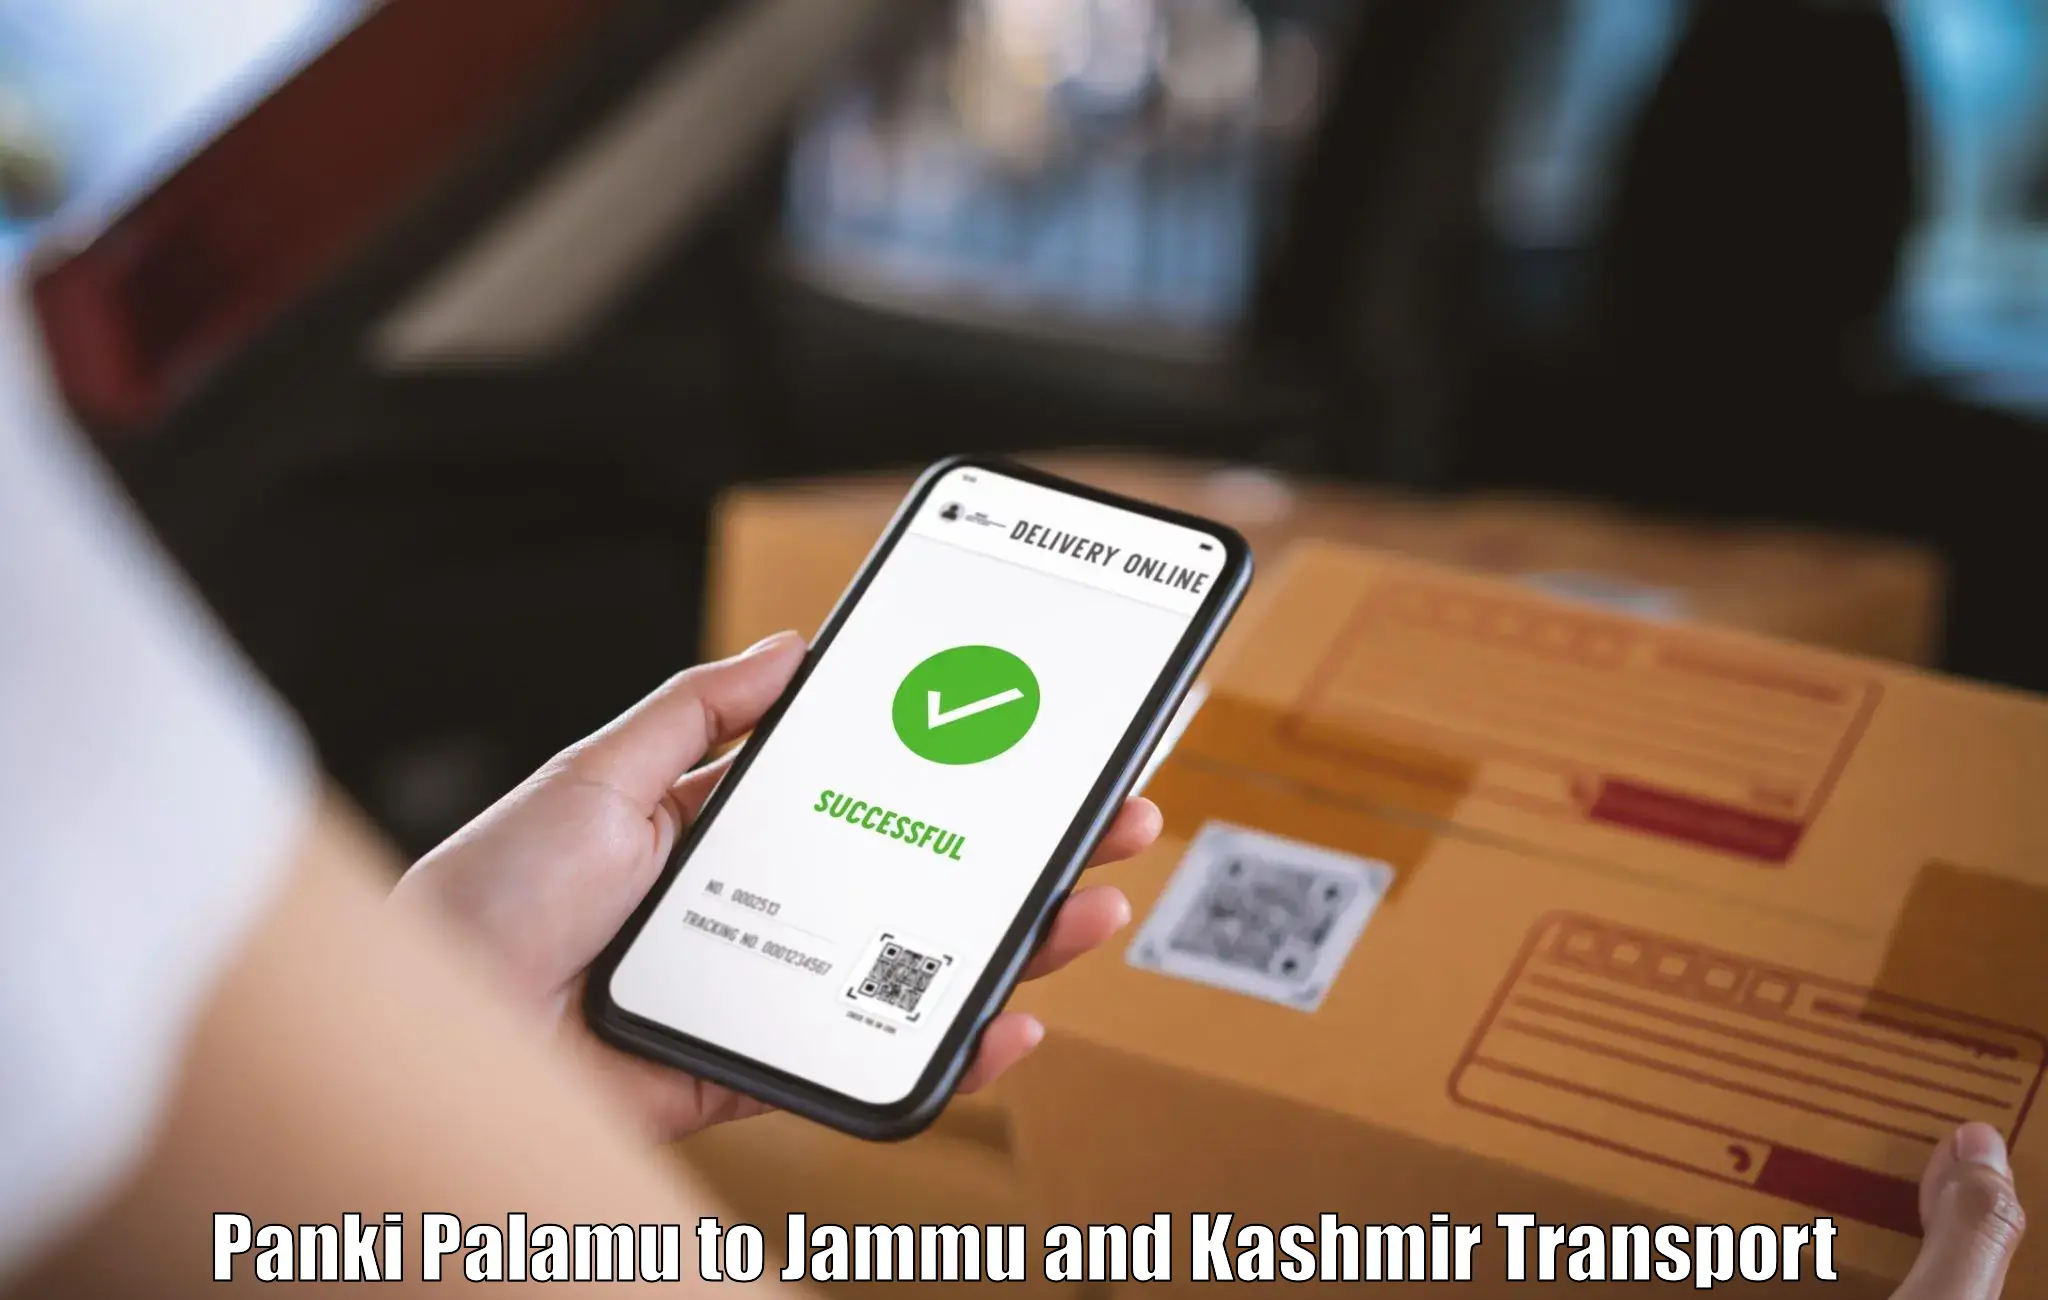 Cargo train transport services Panki Palamu to Jammu and Kashmir